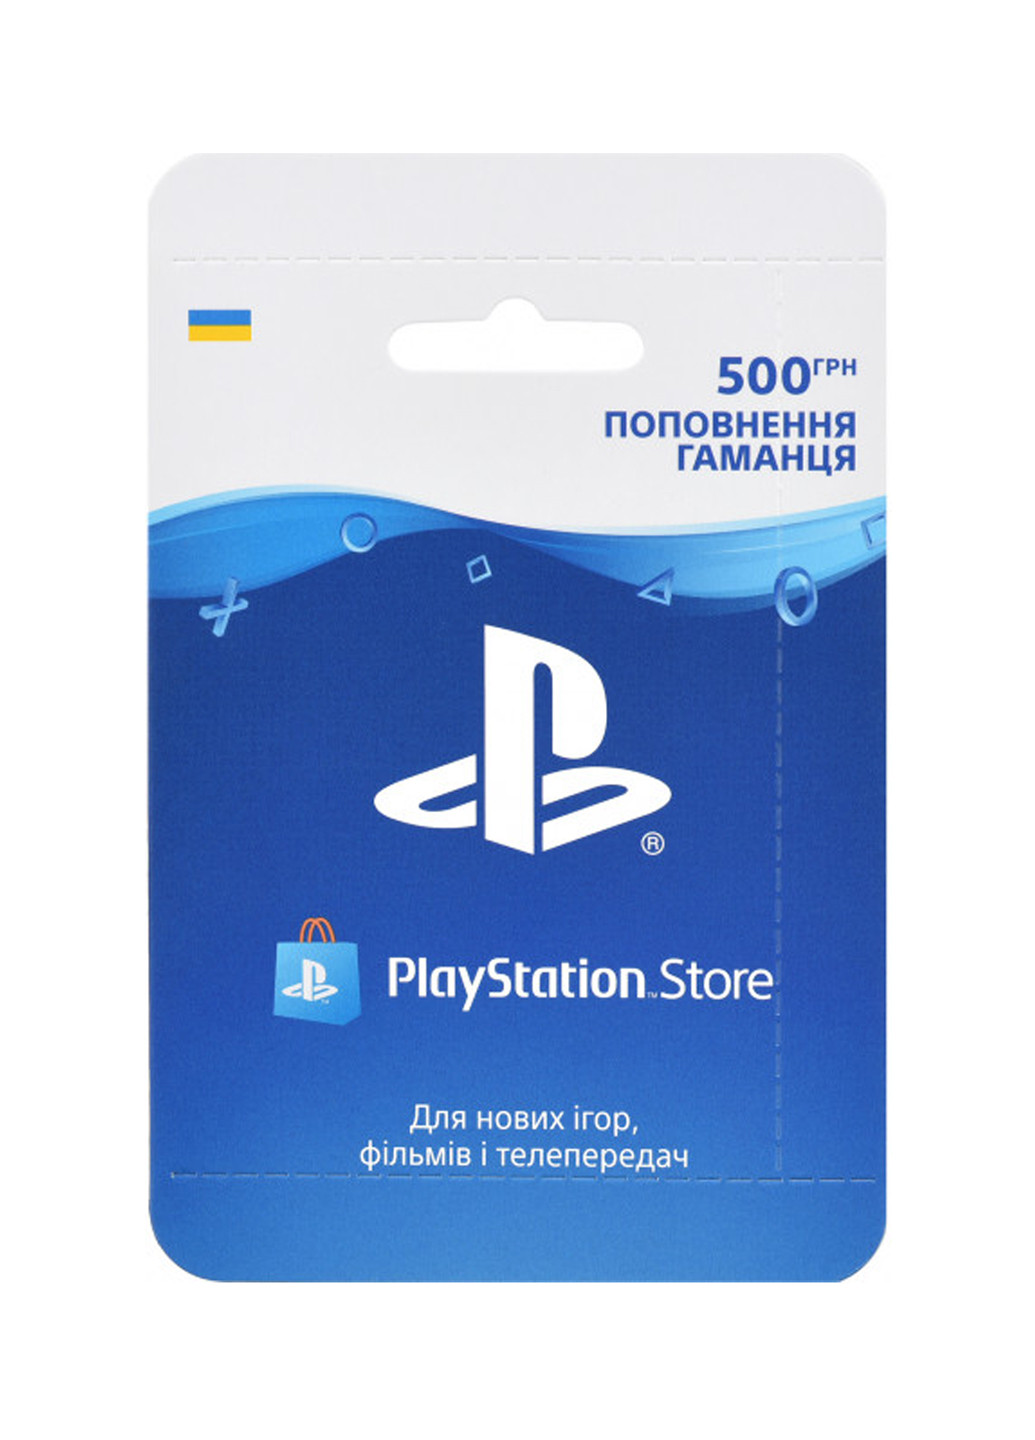 Карта поповнення гаманця Store 500 грн PlayStation карта пополнения кошелька playstation store 500 грн (149769979)